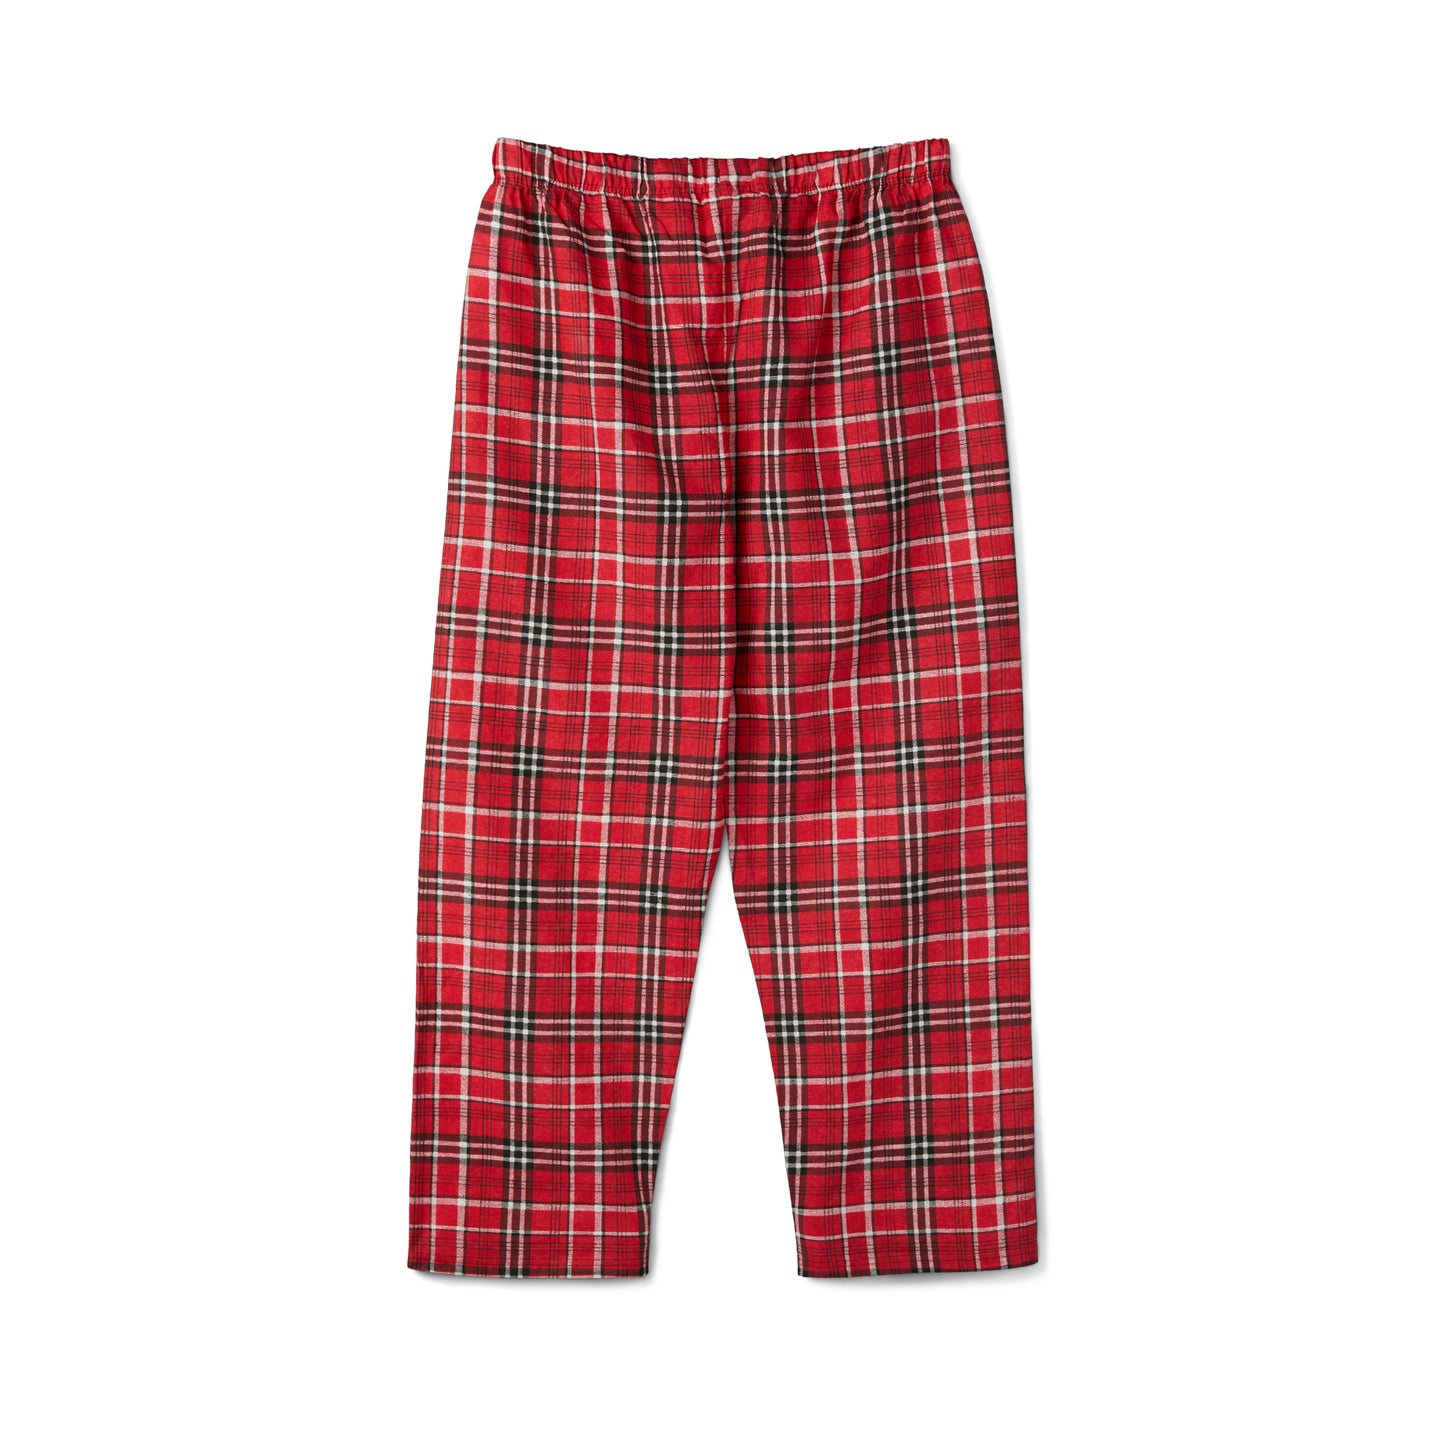 Christmas Men's Short Sleeve Pajama Set